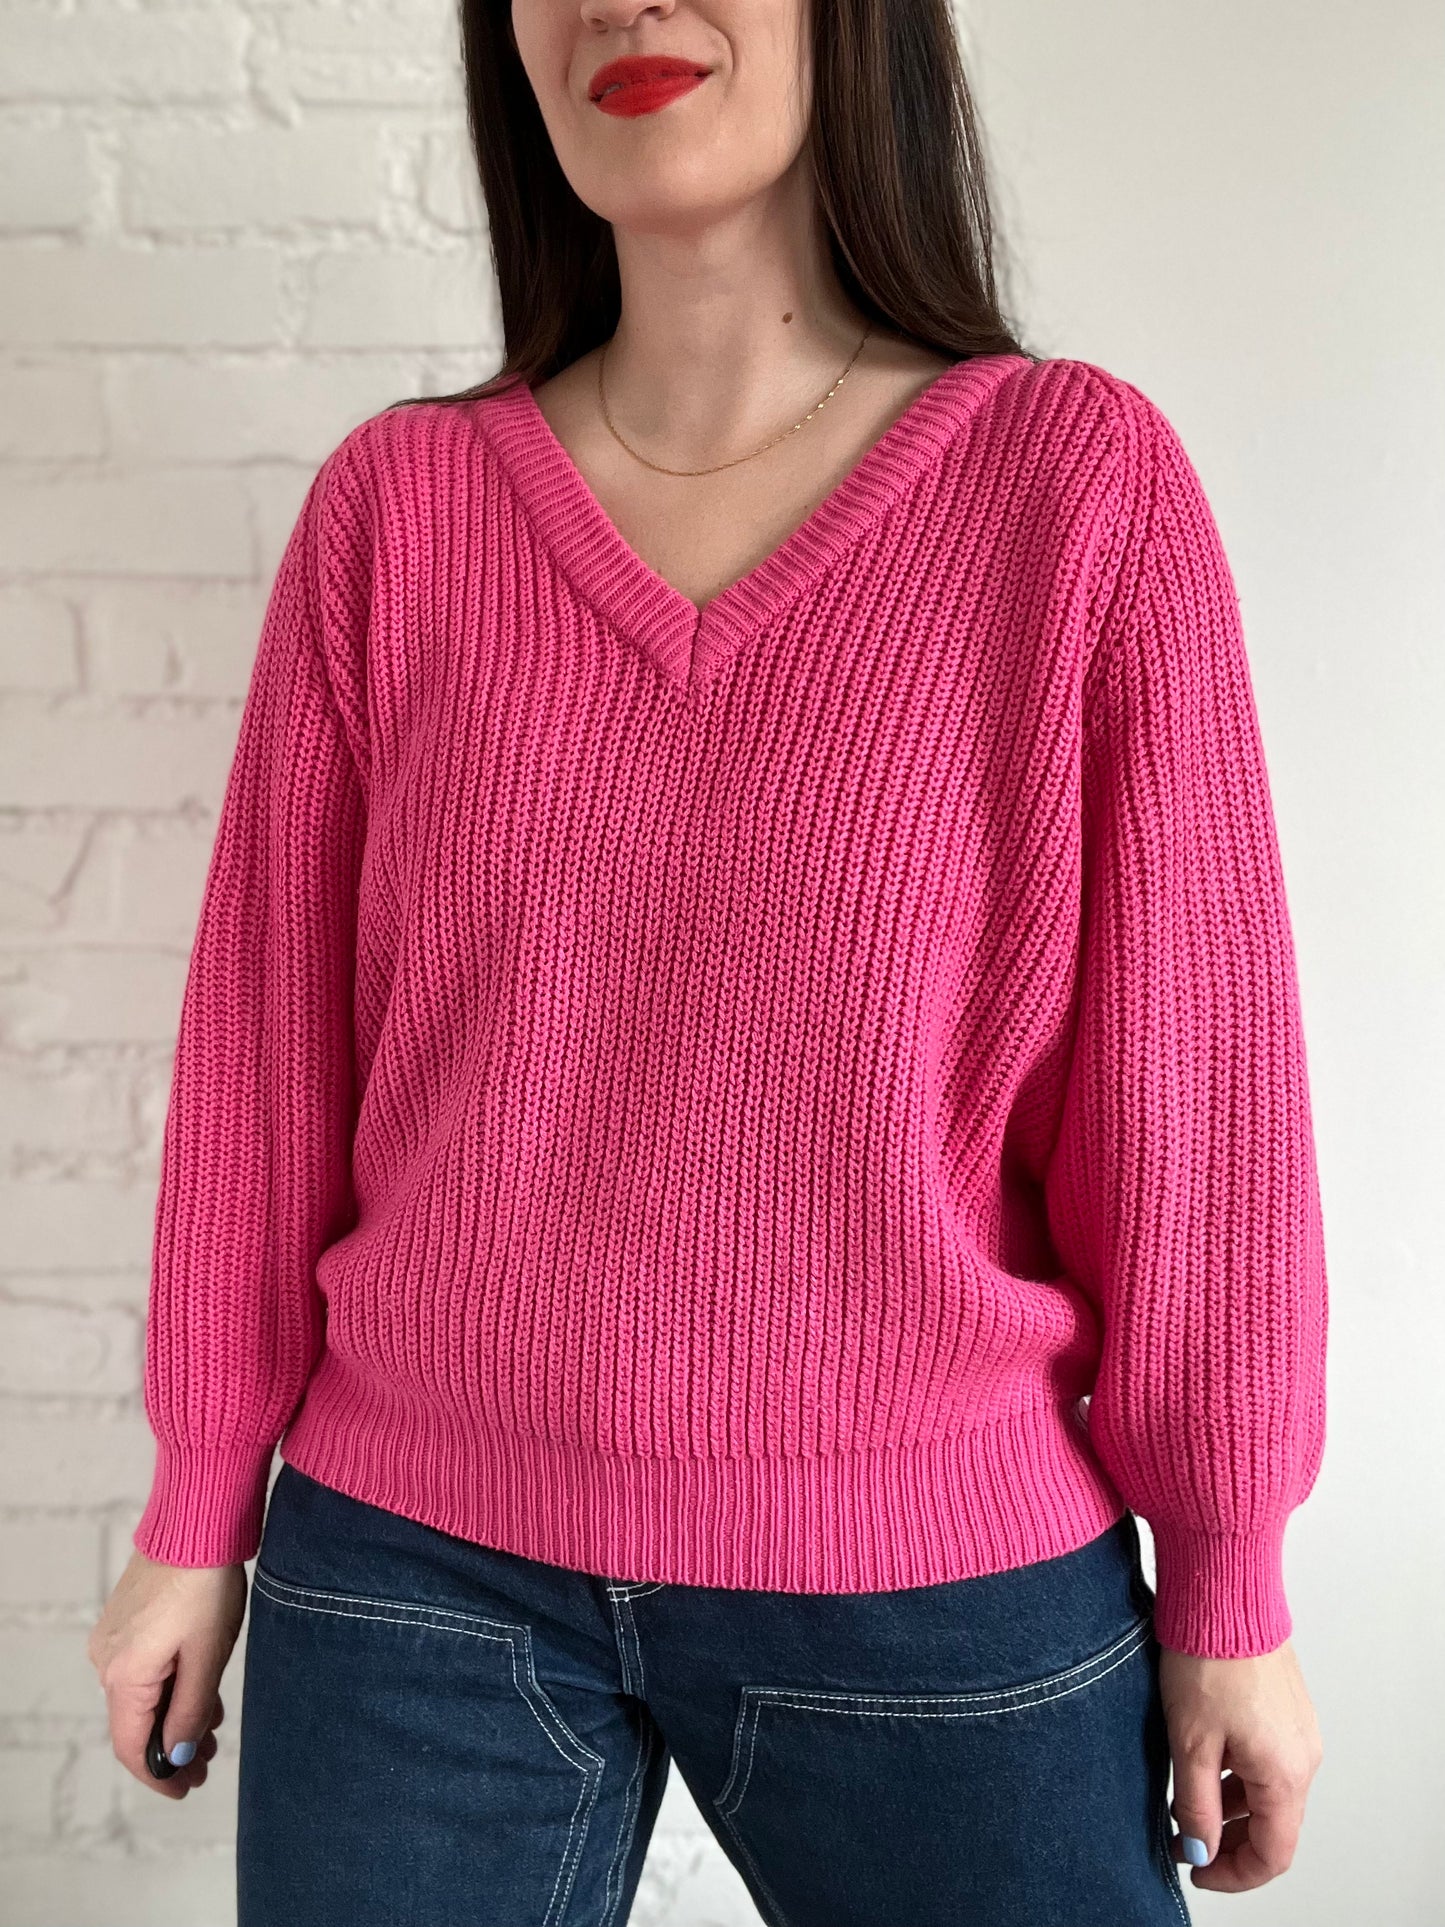 Preppy Pink Knit Sweater - L